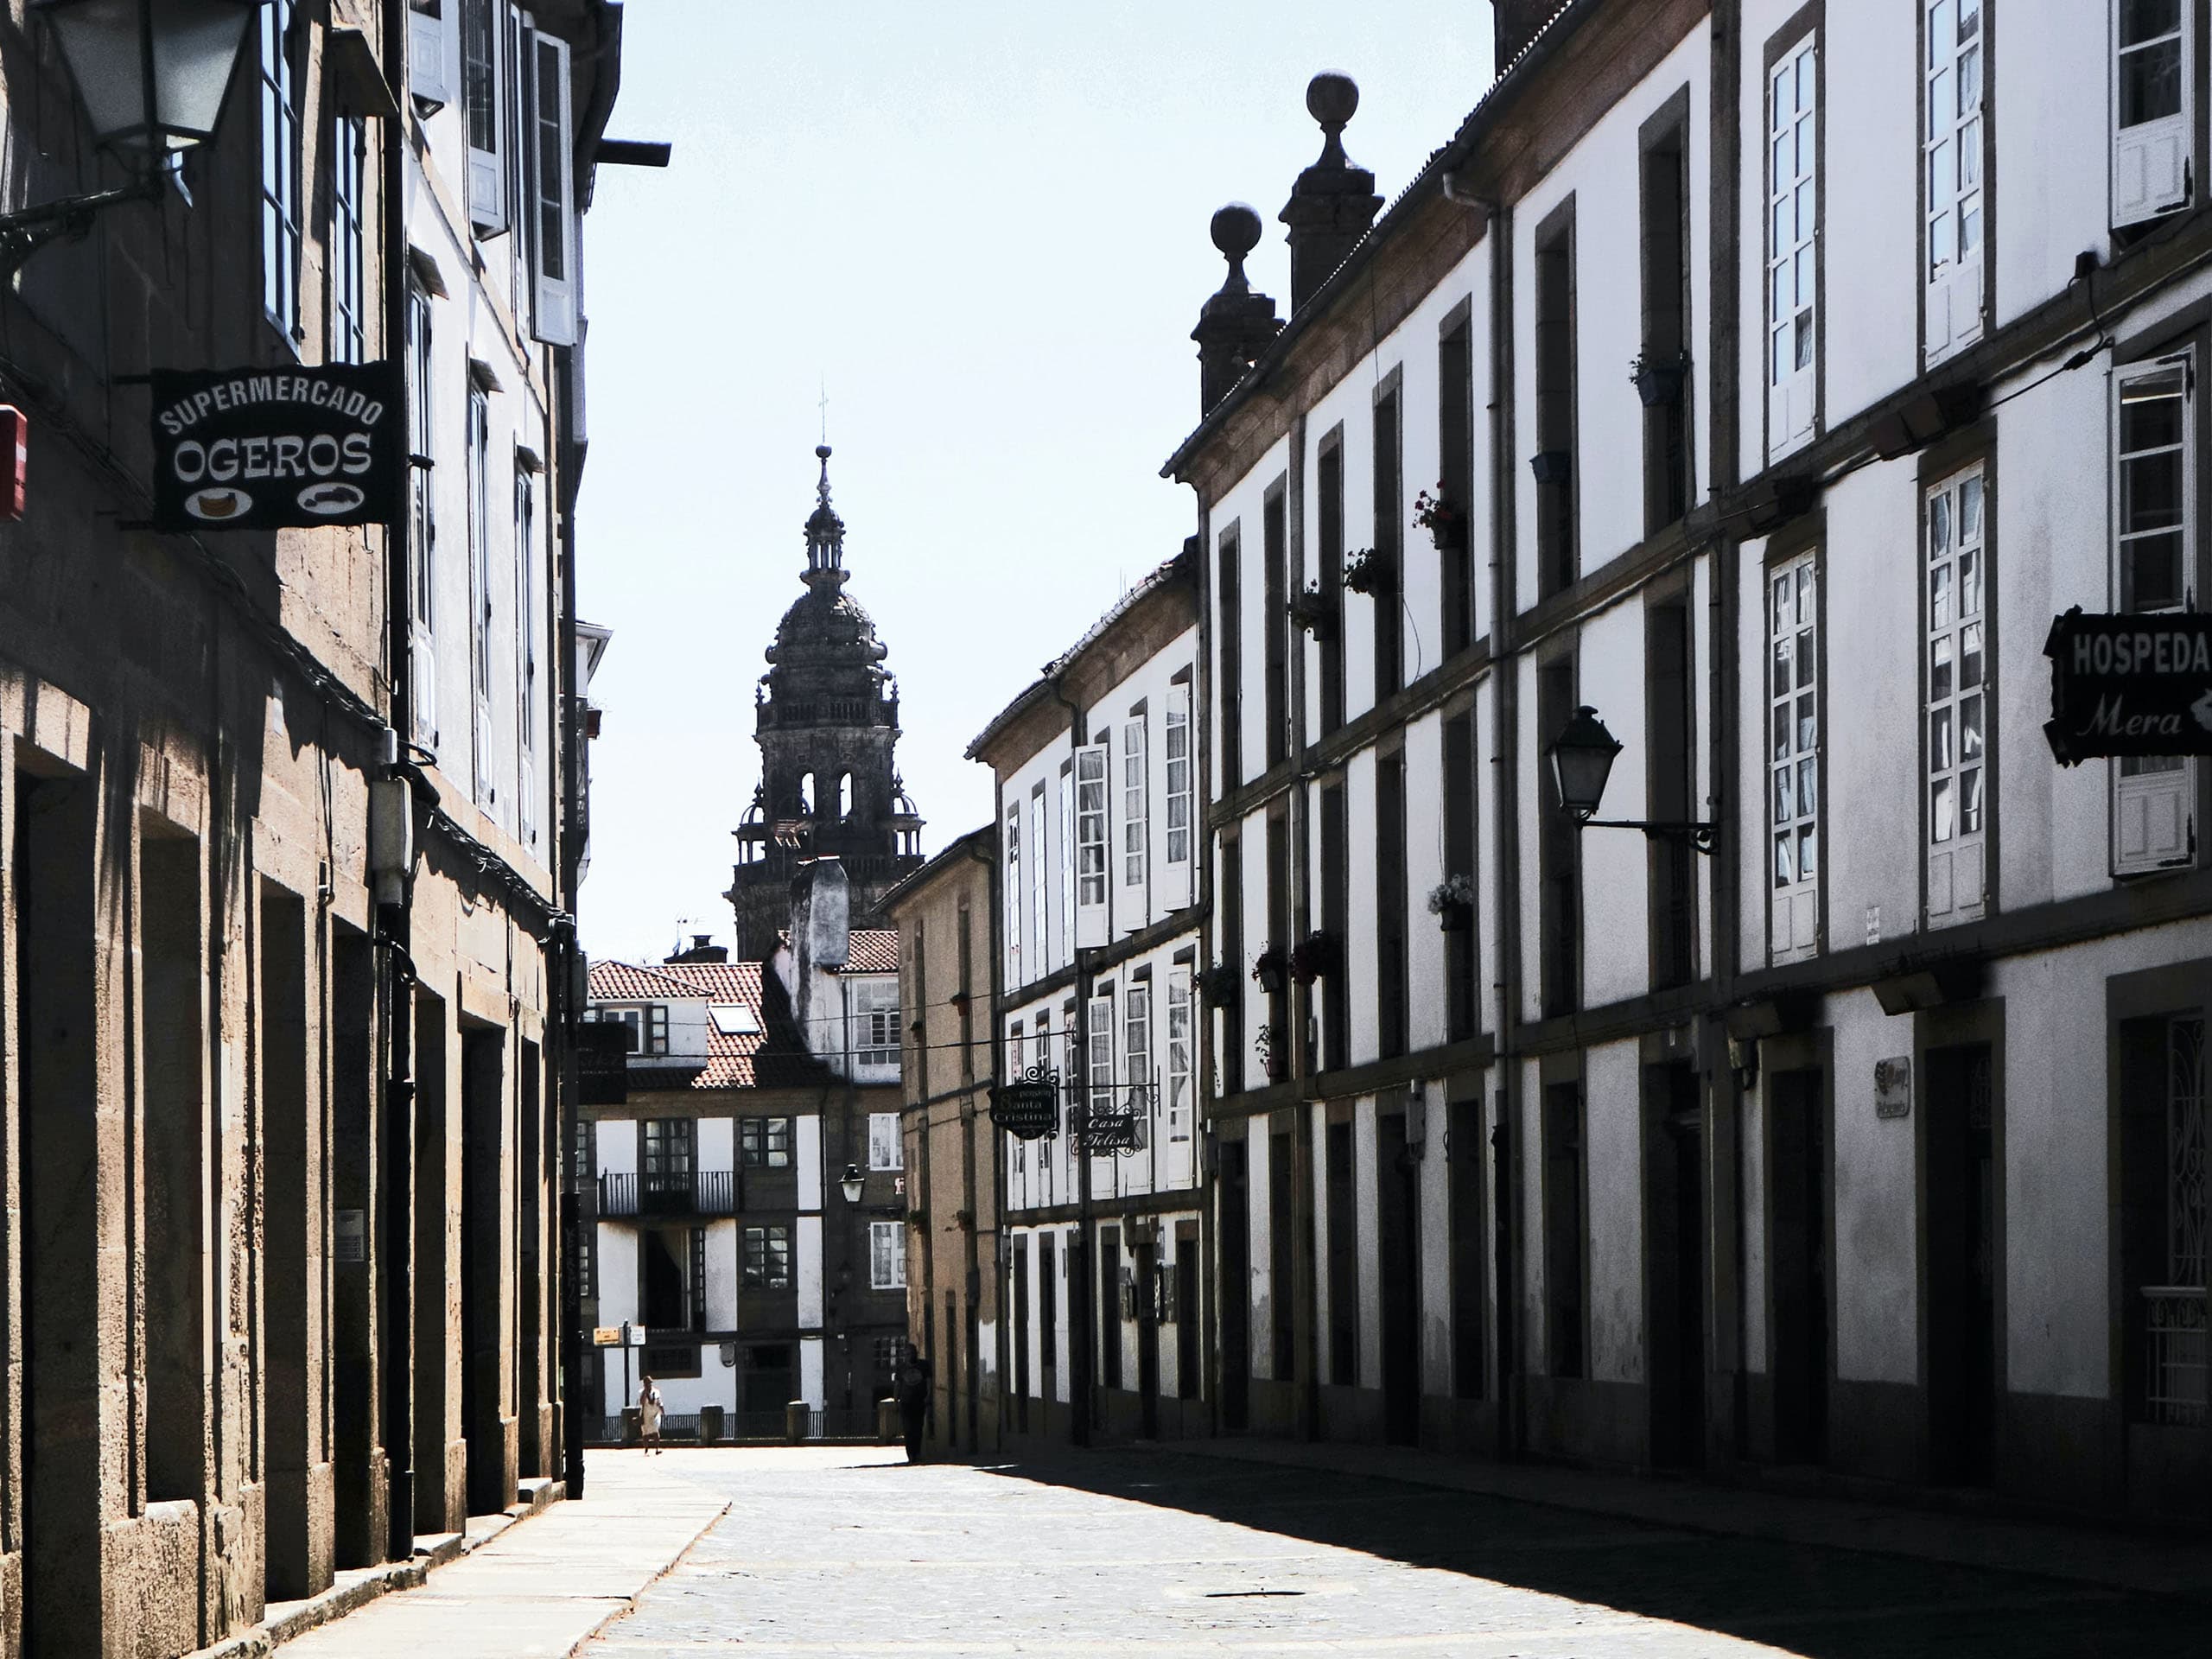 Over eight Caminos that lead to Santiago de Compostela